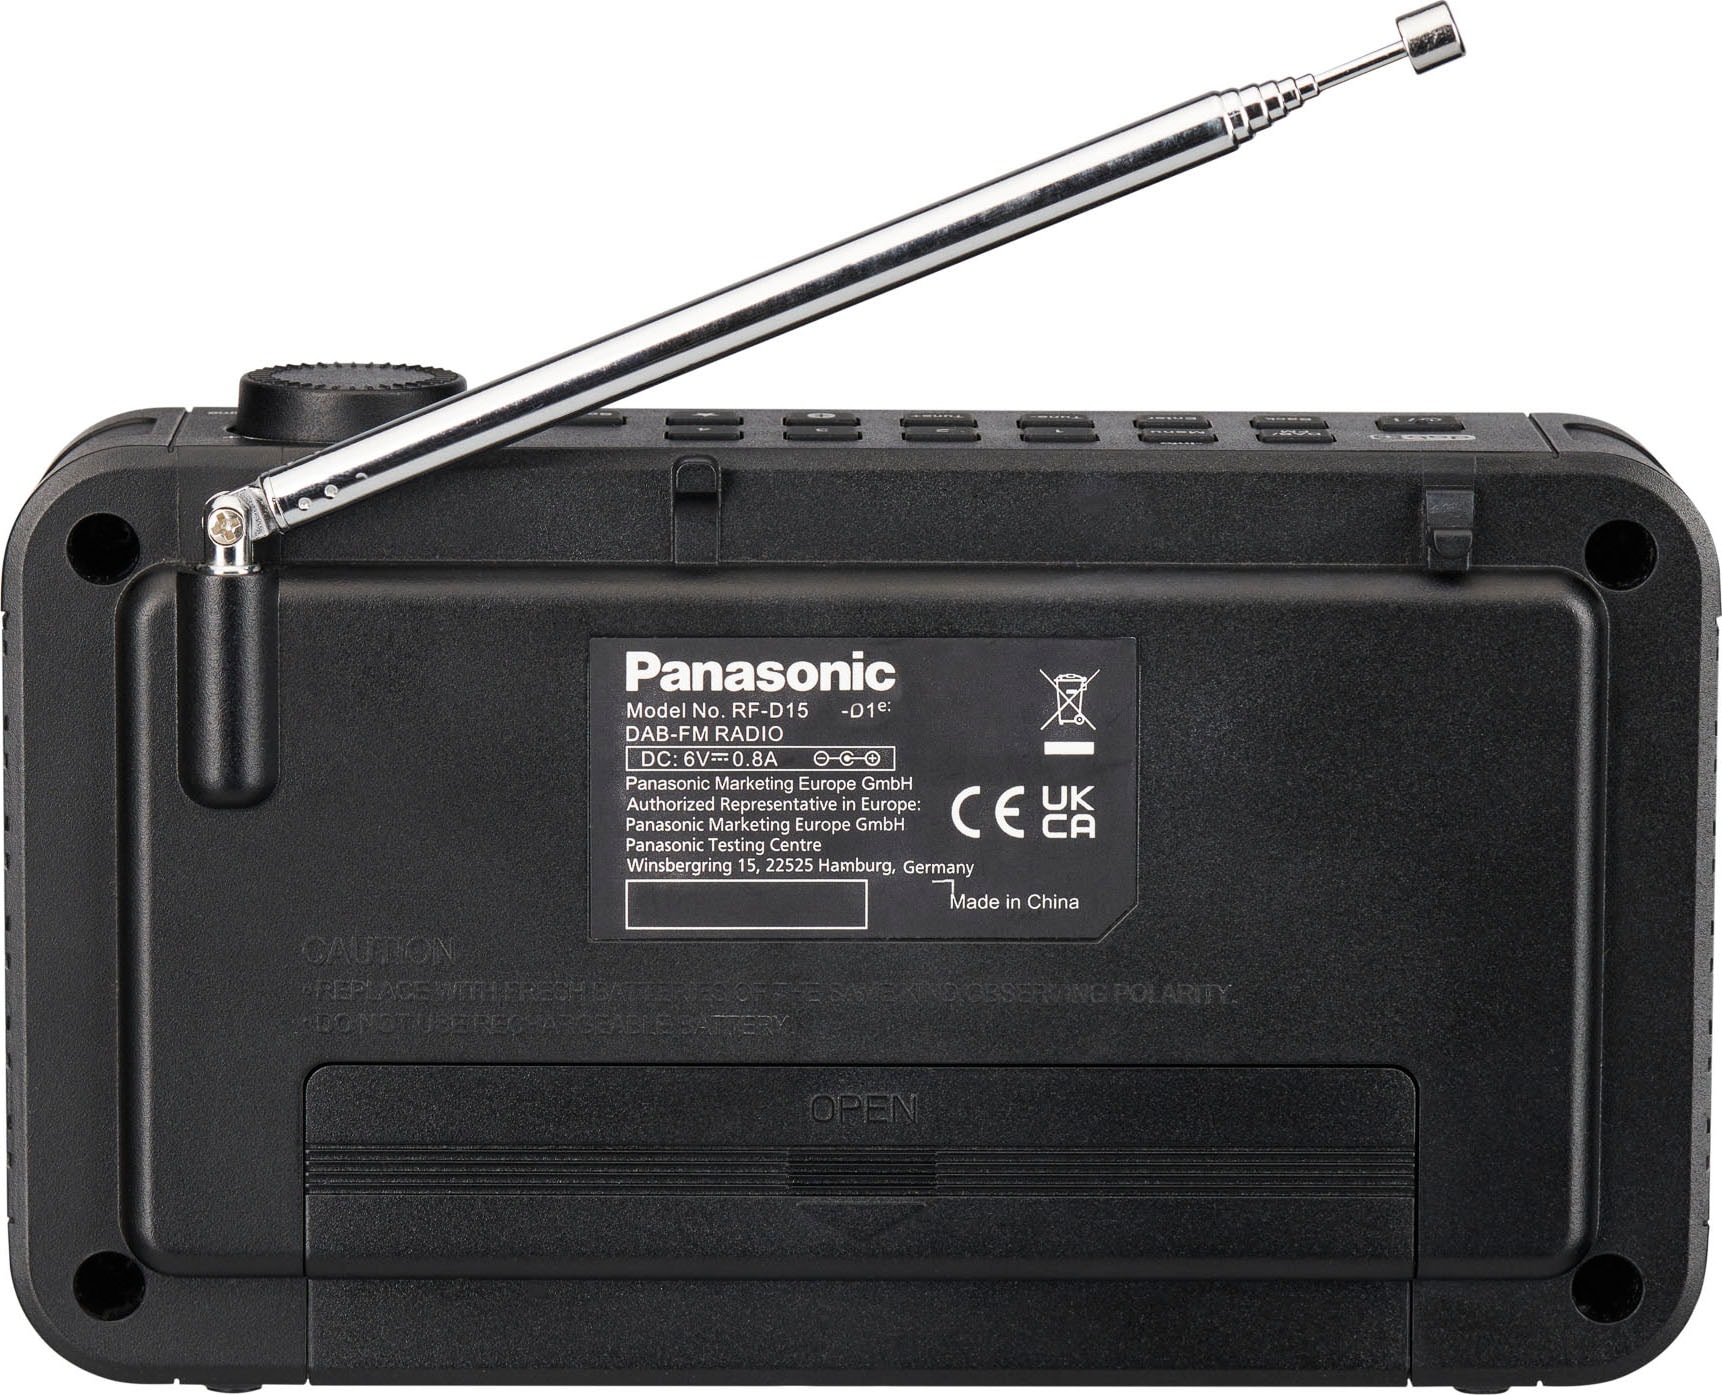 Panasonic Digitalradio (DAB+) »D15«, (Bluetooth 3 Digitalradio bei RDS-FM-Tuner mit W) kaufen OTTO (DAB+)-UKW